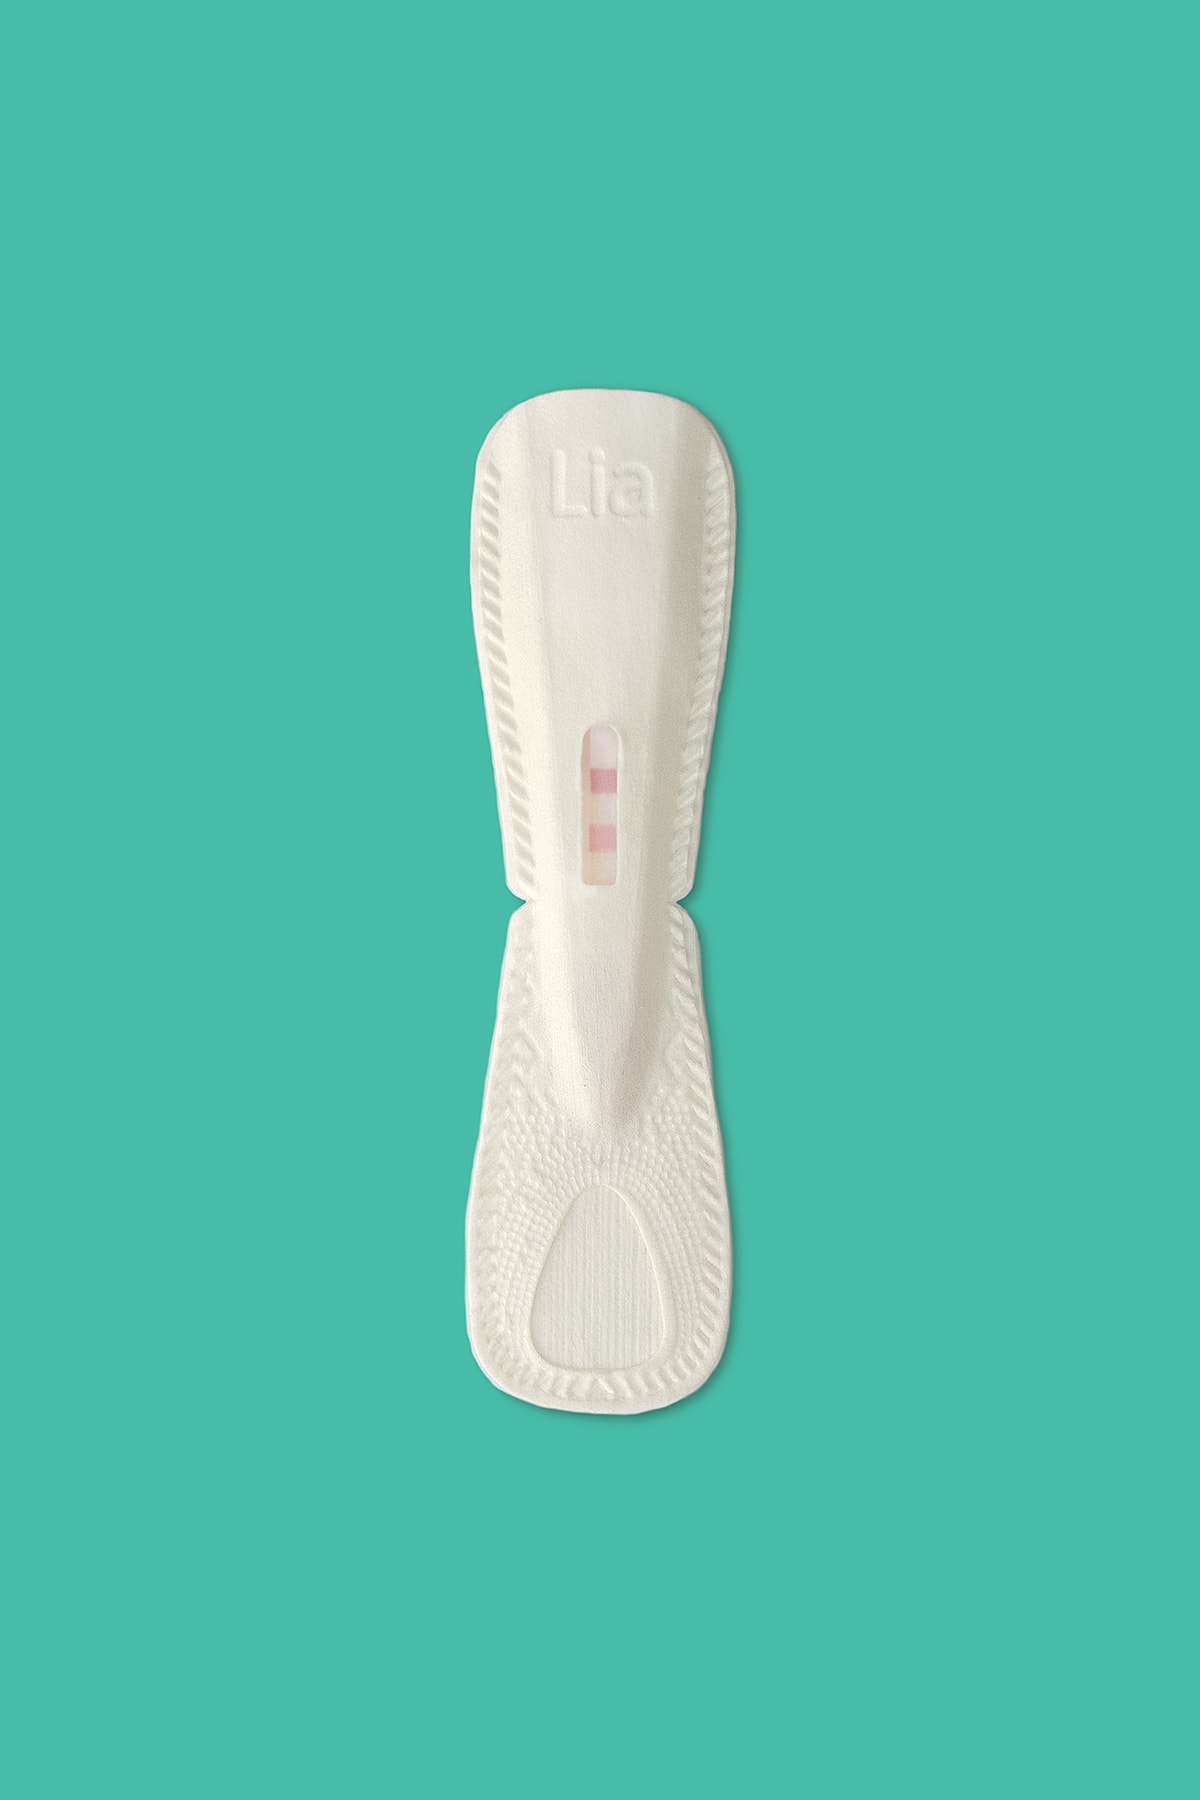 Lia Pregnancy Test Flushable Biodegradable Sustainable